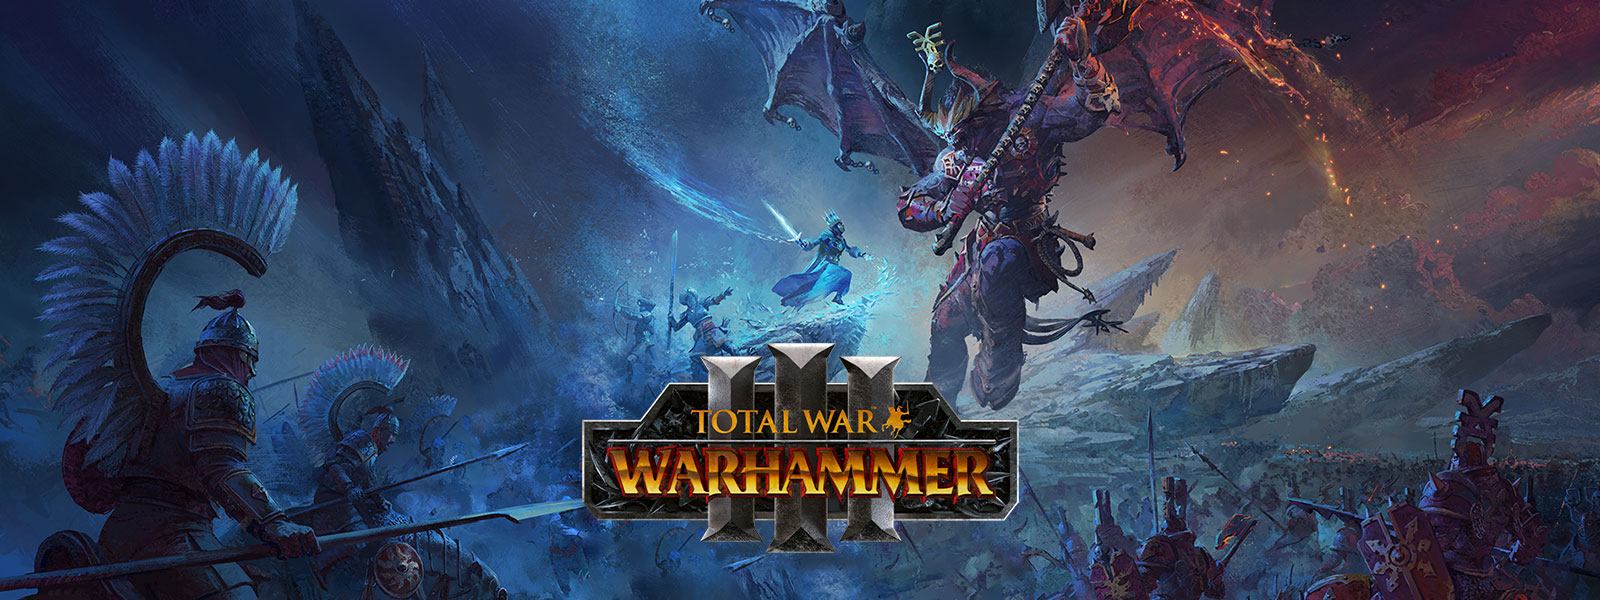 『Total War Warhammer 3』、巨大なドラゴンのディーモンと戦場で対決する氷の魔法使い。